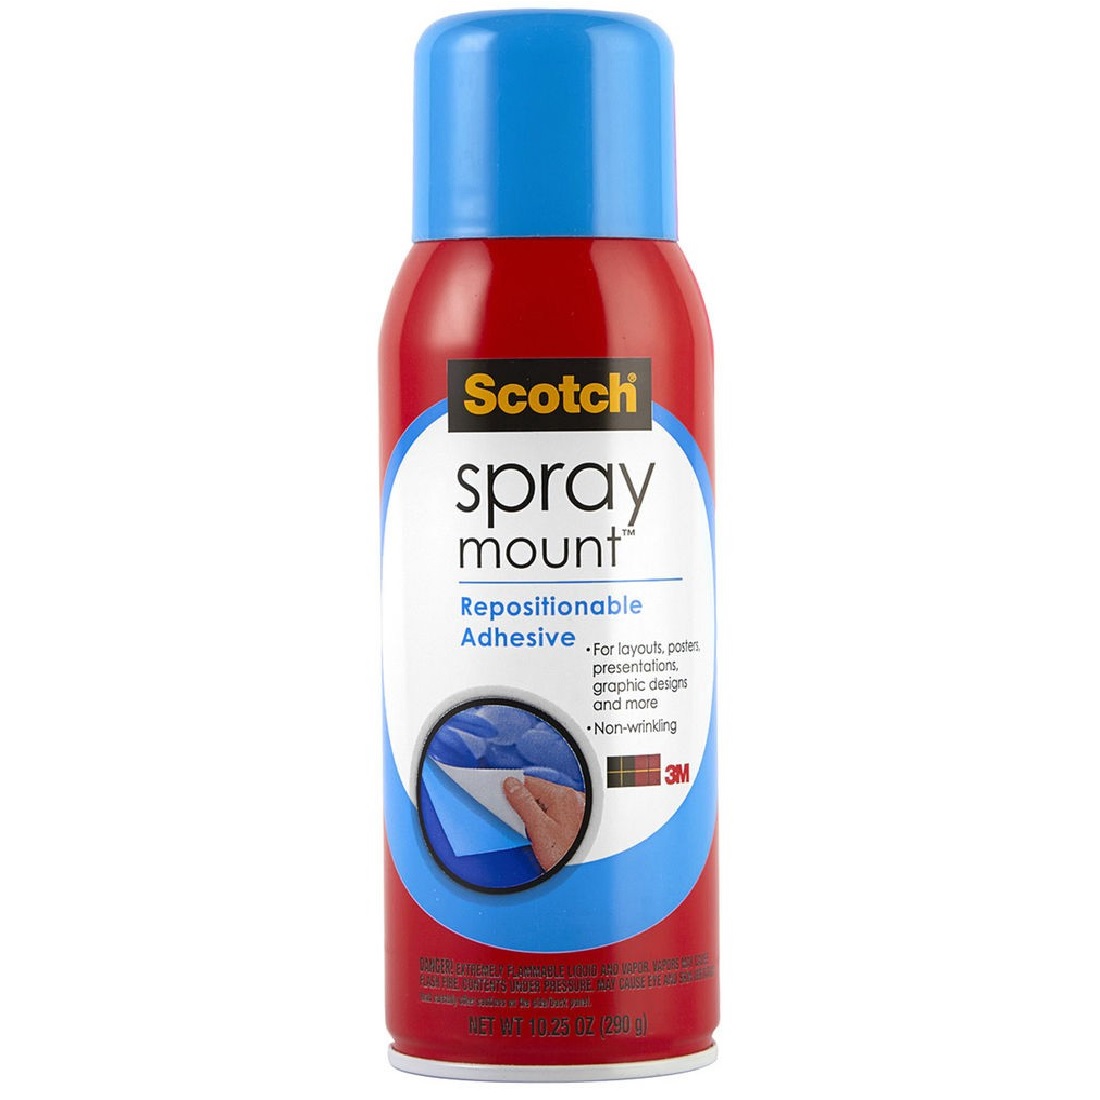 3M Scotch 6065 Spray Mount Repositionable Adhesive